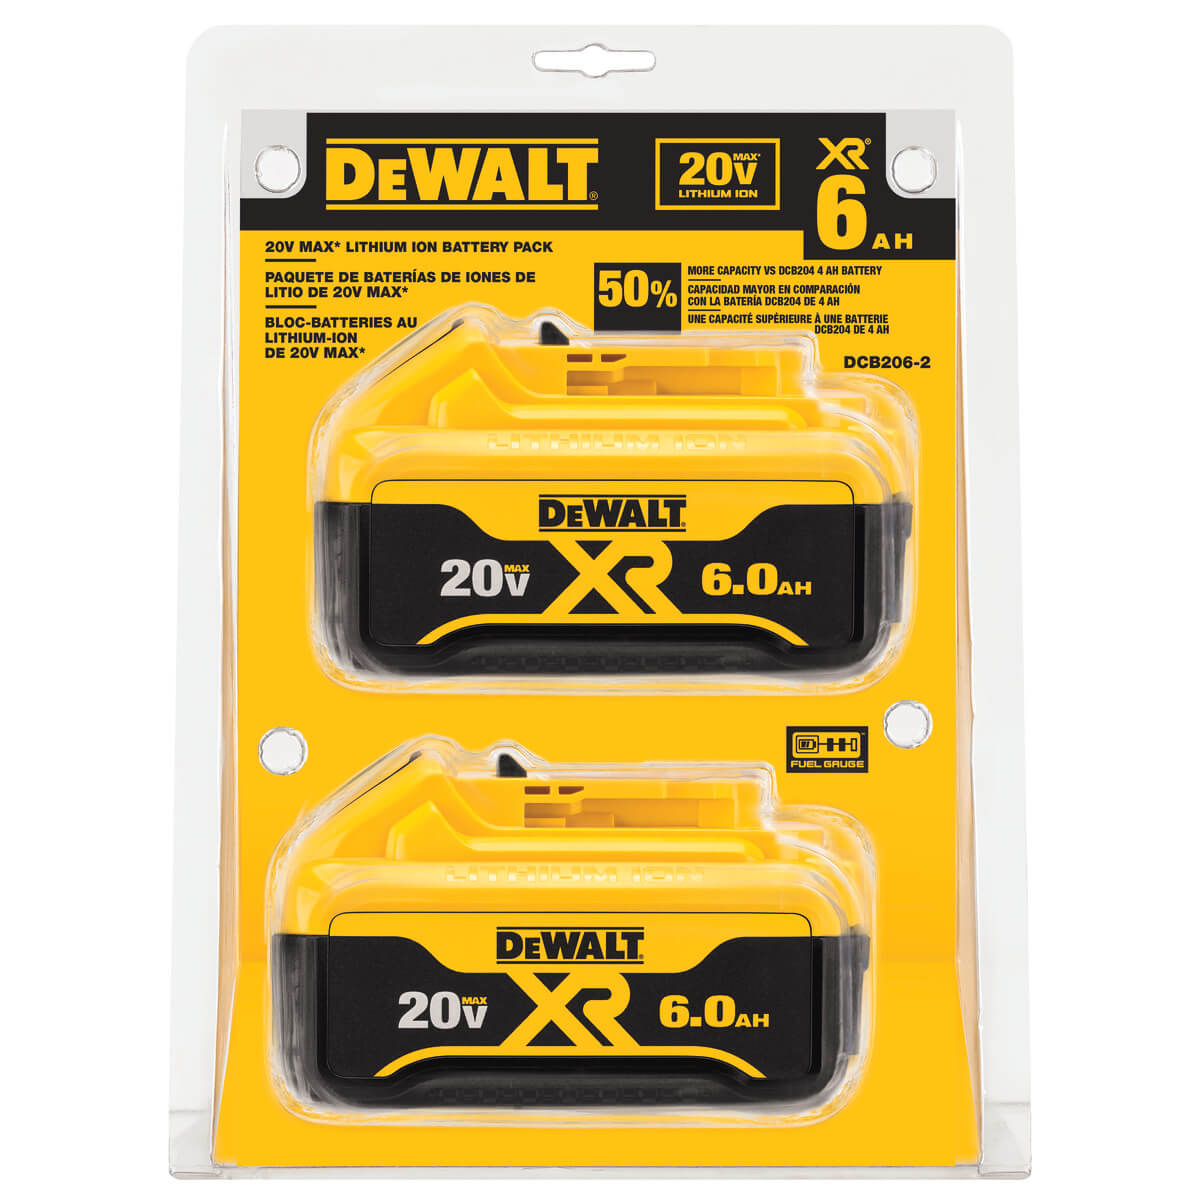 DEWALT, DEWALT DCB206-2 20V MAX 6.0Ah Lithium Ion Premium Battery, 2 Pack